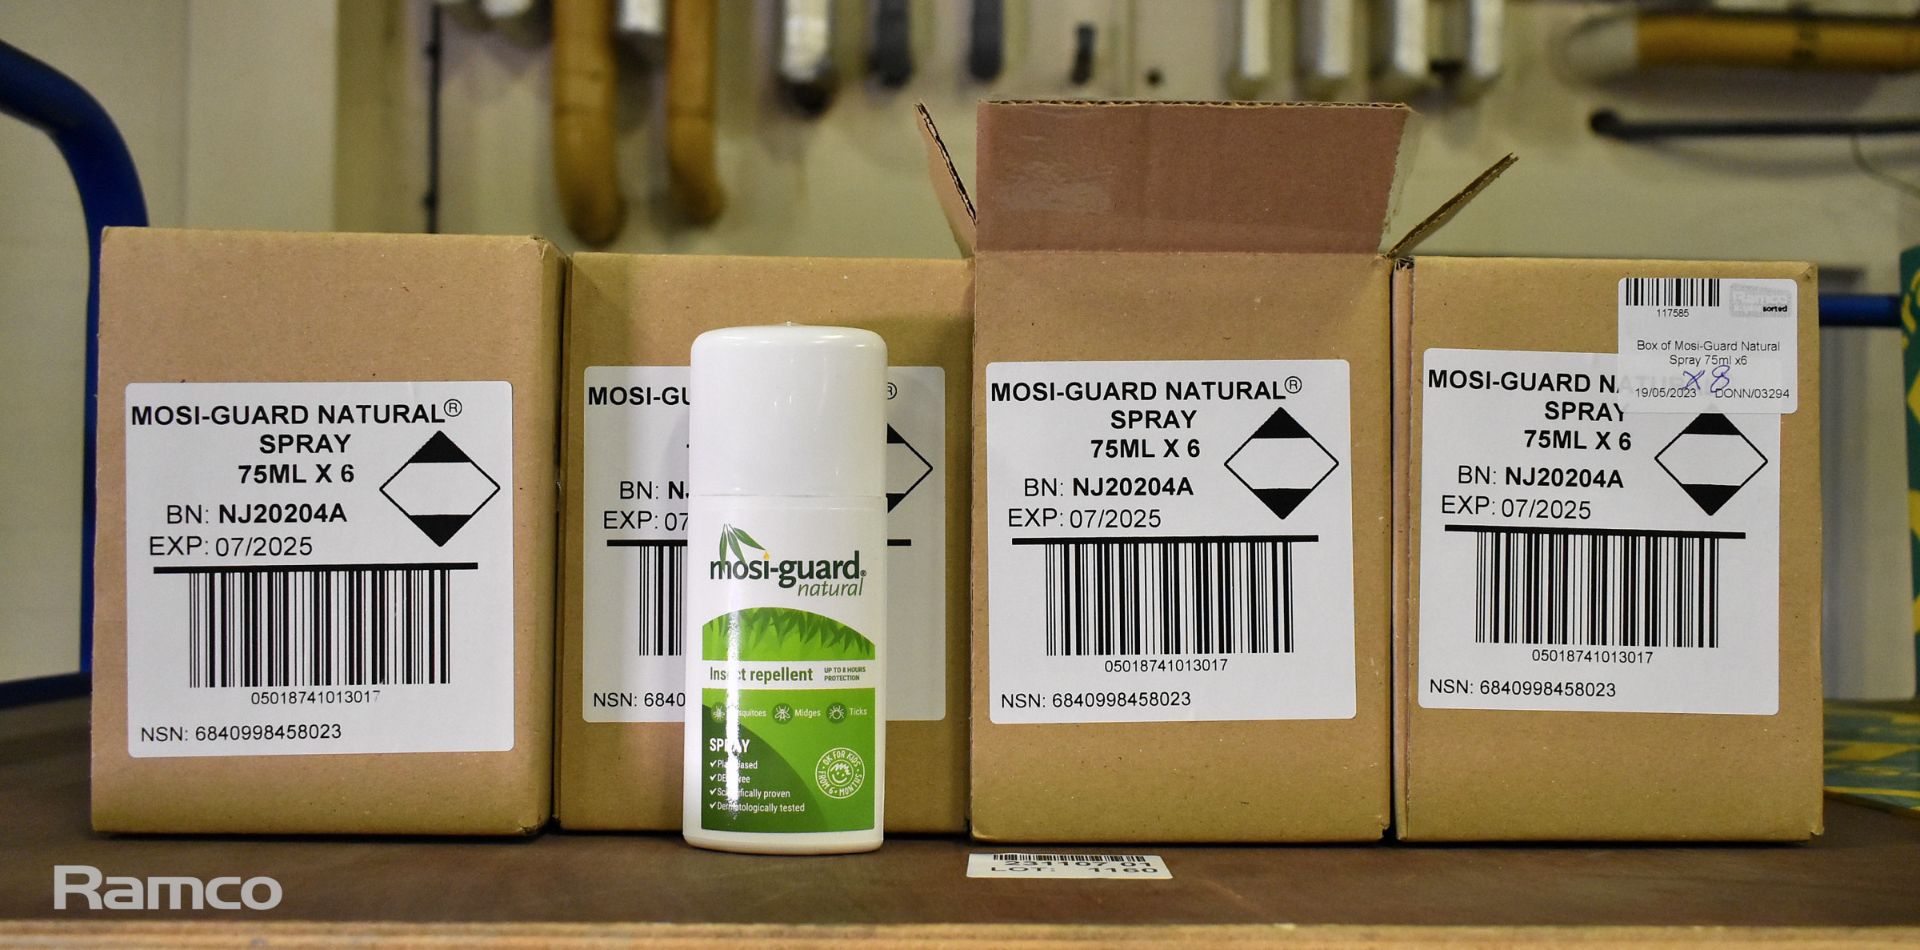 16x boxes of Mosi-Guard Natural Spray - 6x 75ml bottles per box - Image 2 of 3